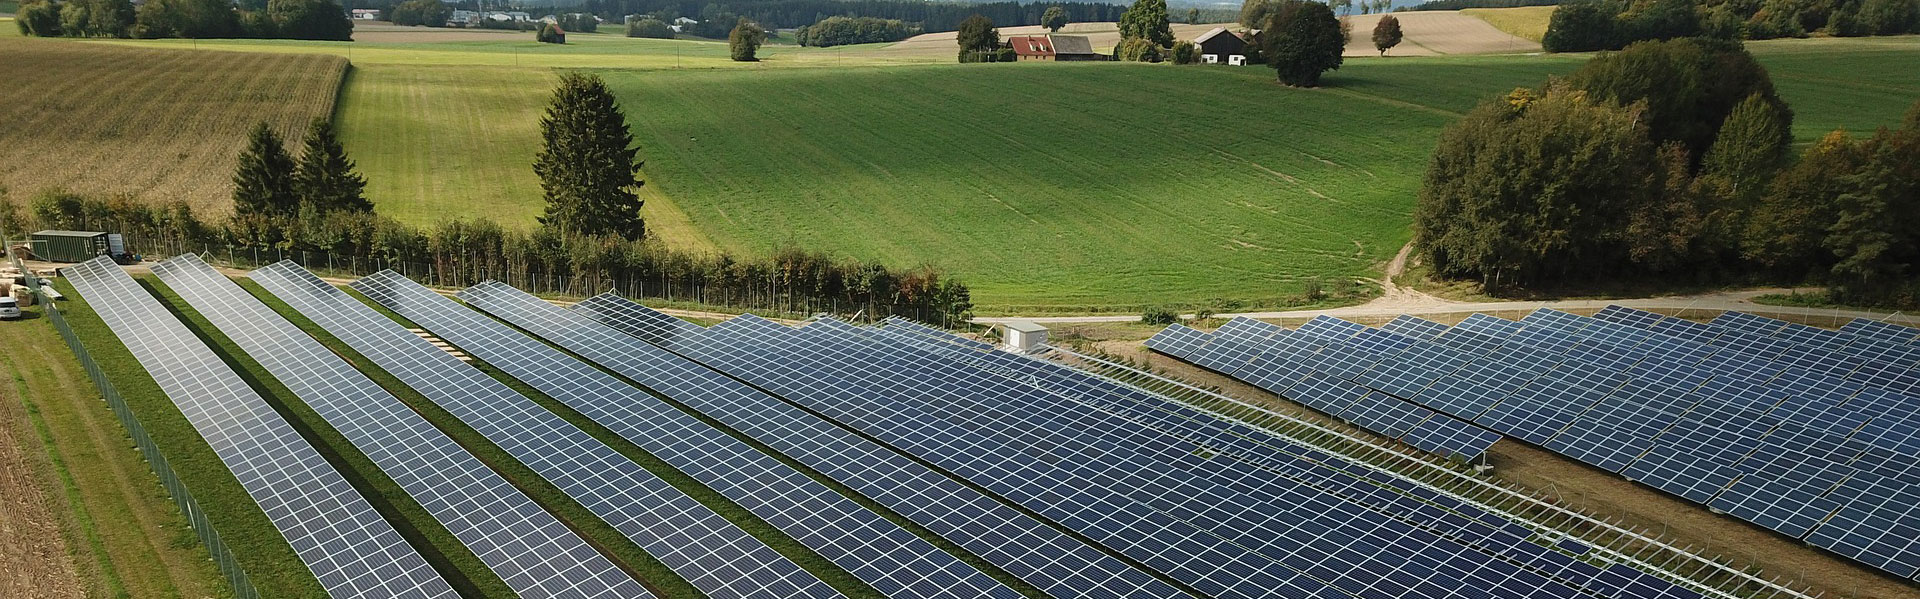 solar panels on a field